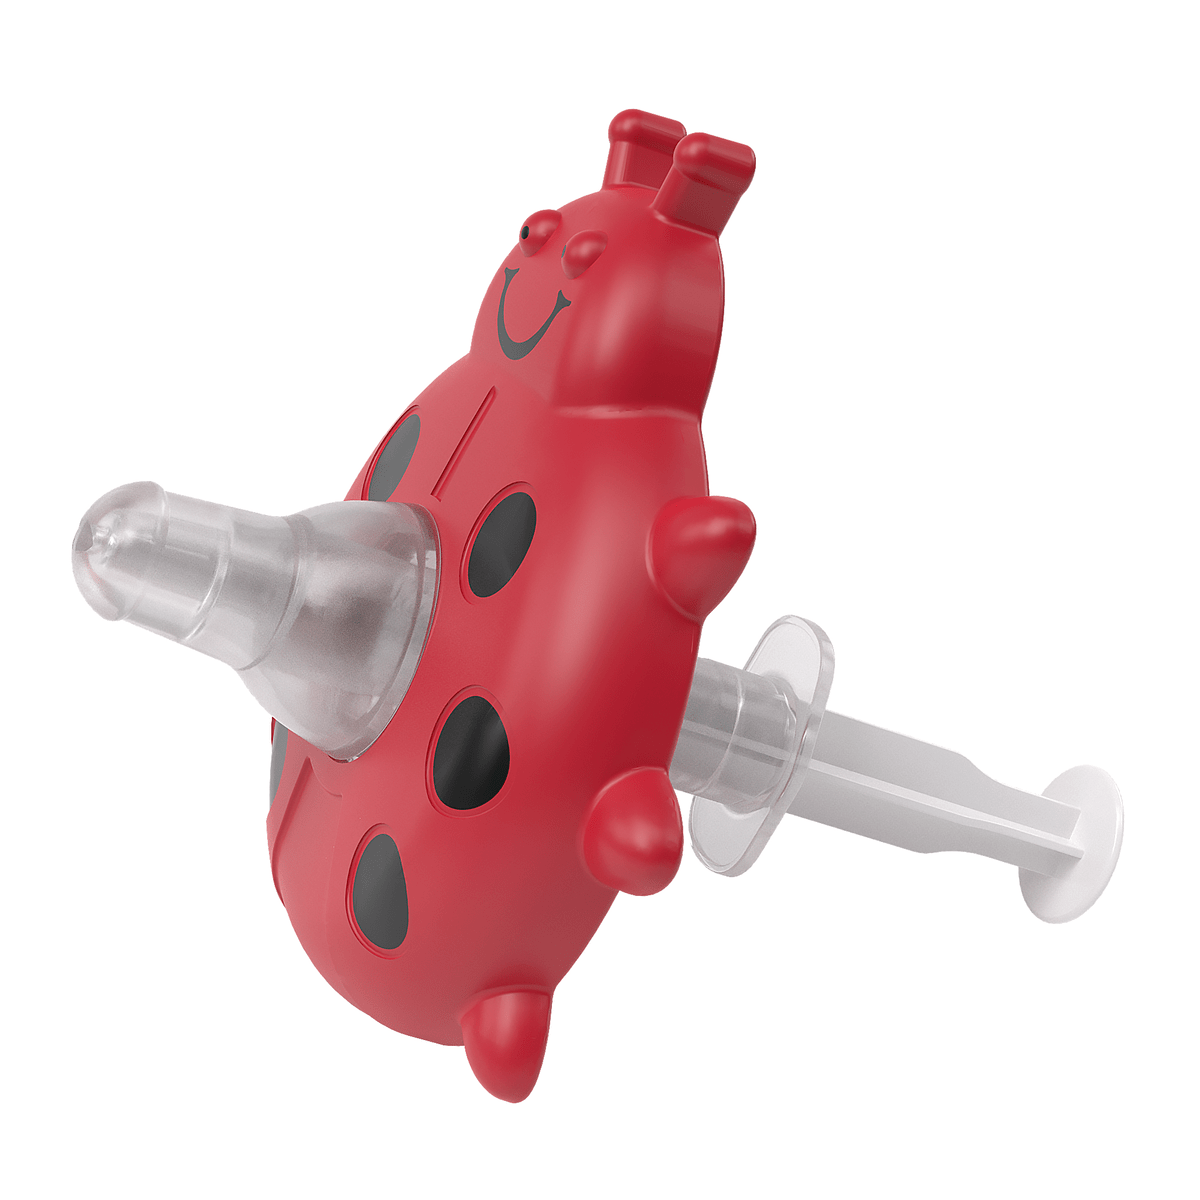 Side image of ladybug oral syringe